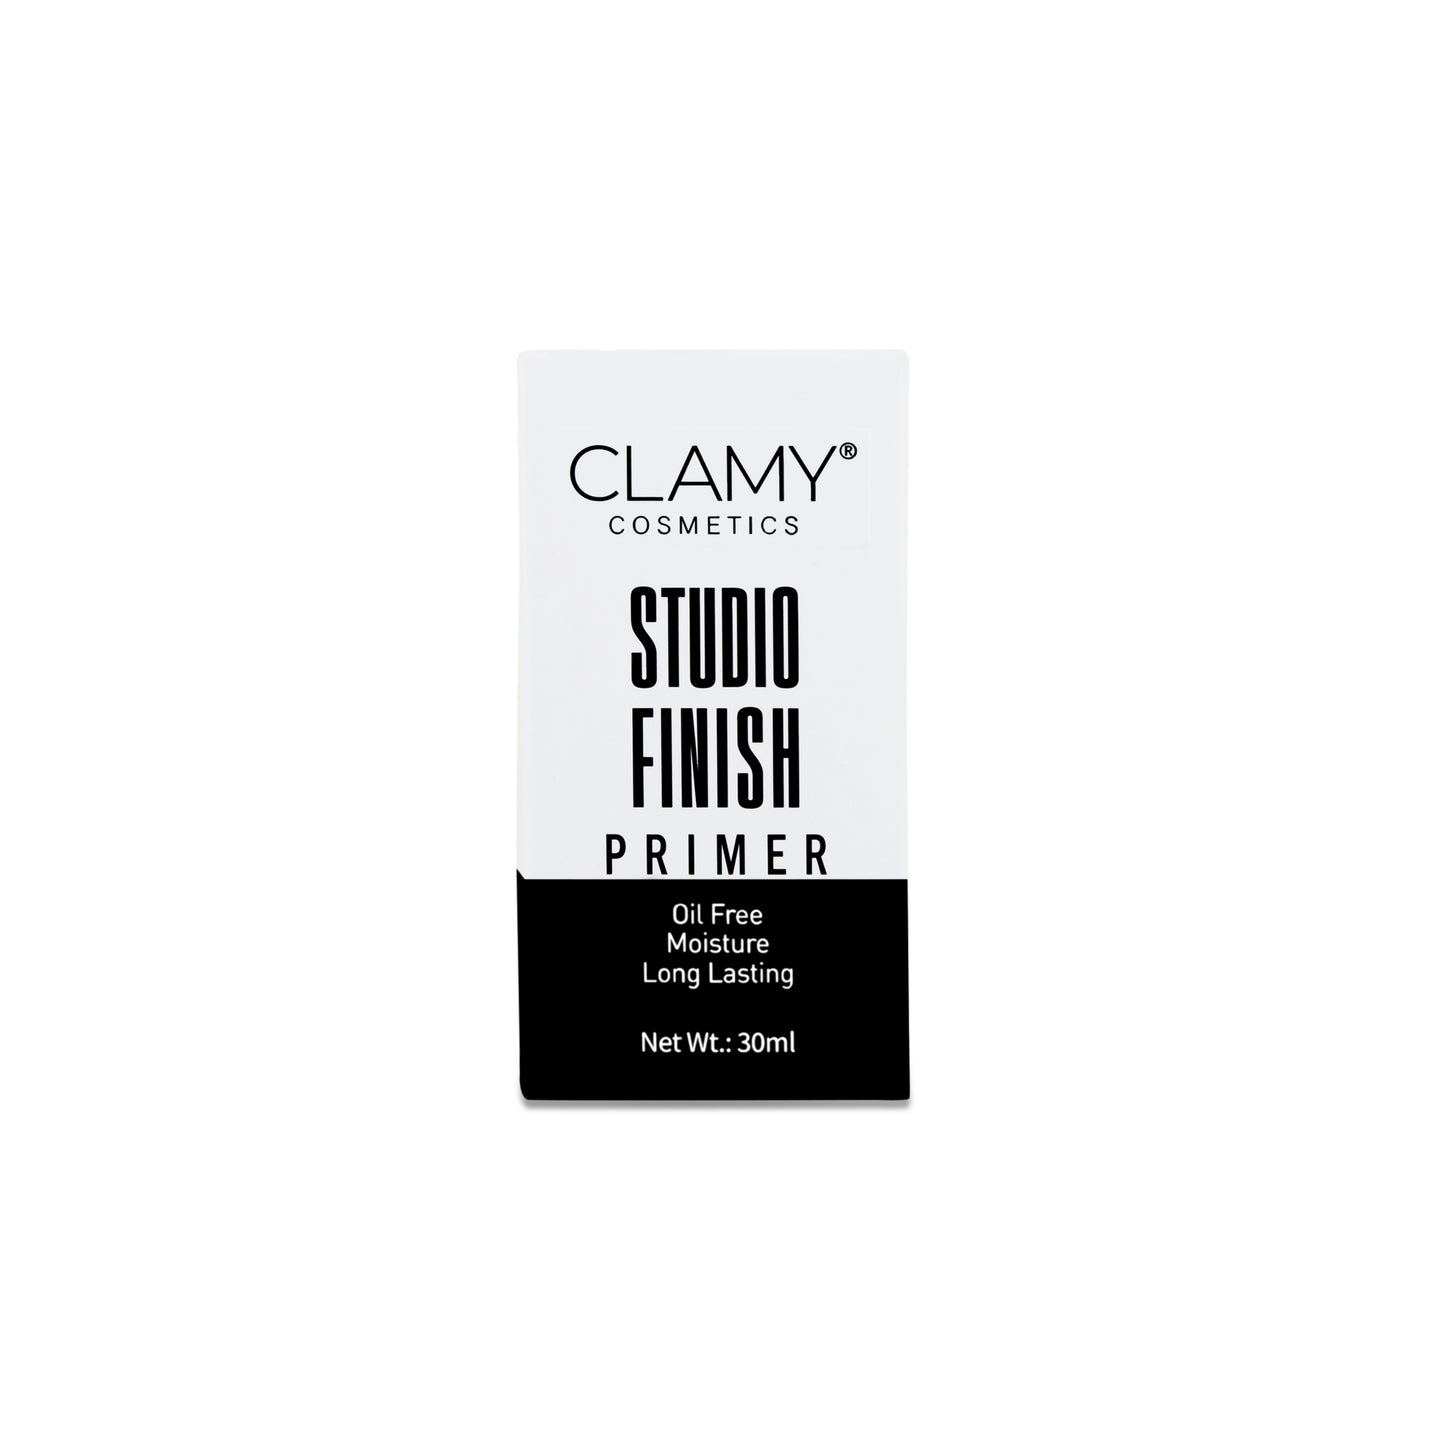 Clamy Primer Studio Finish | 3 in 1 Oil Free, Moisturising, Long Lasting 30ml